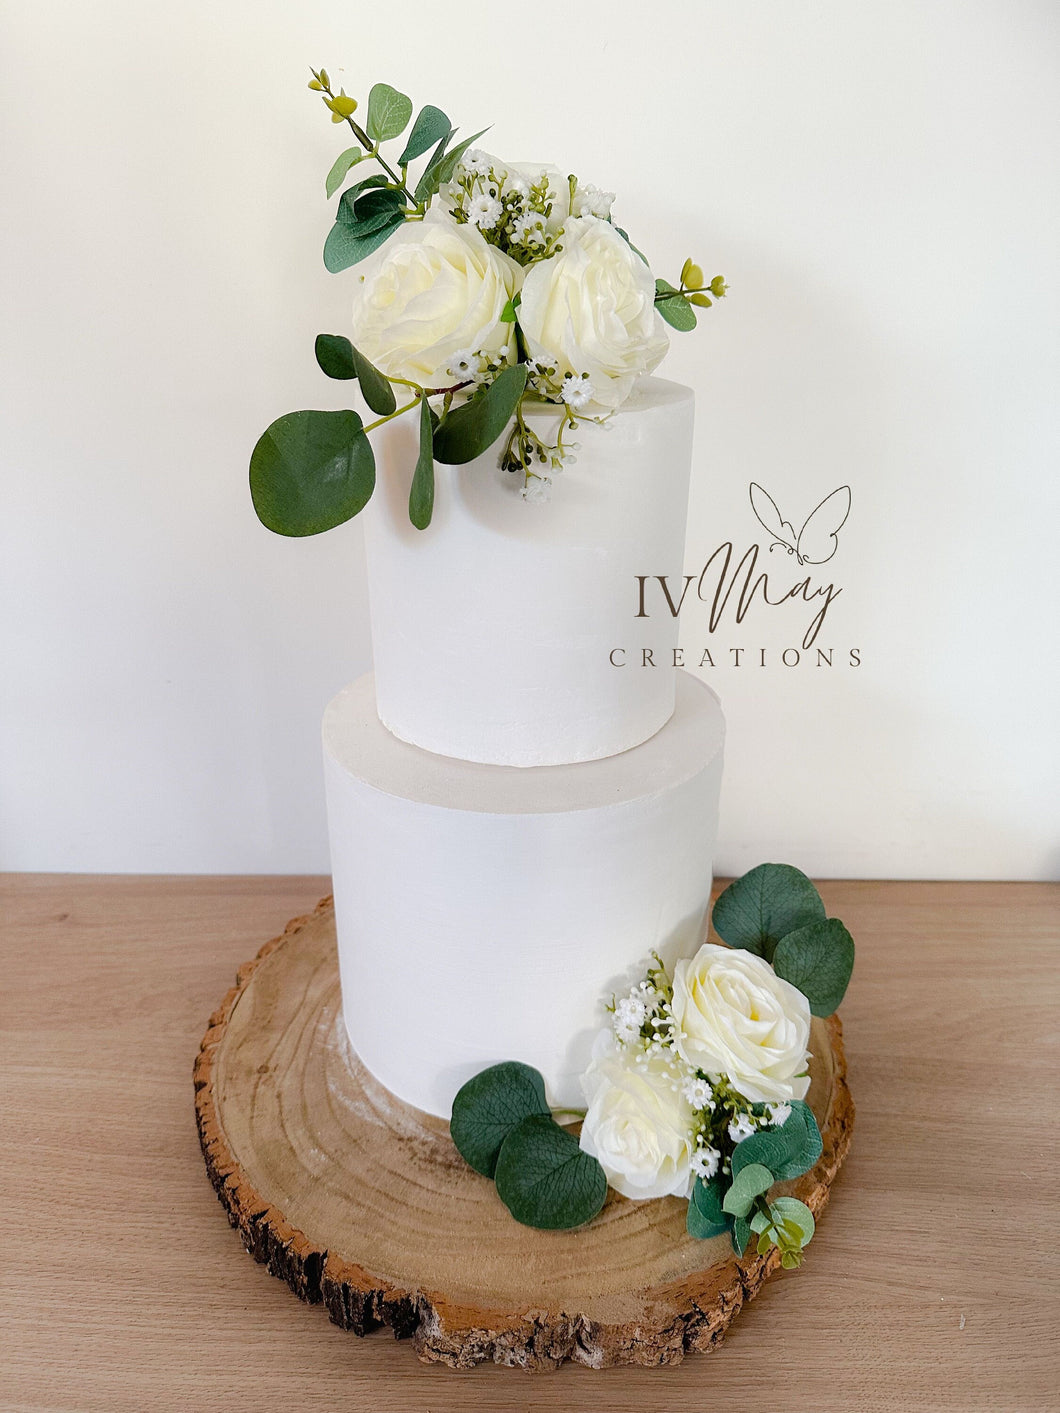 Cake Flowers - Wedding Cake Flowers - Cake Topper - silk ivory roses - gypsophila - Christening / Birthday cake decoration